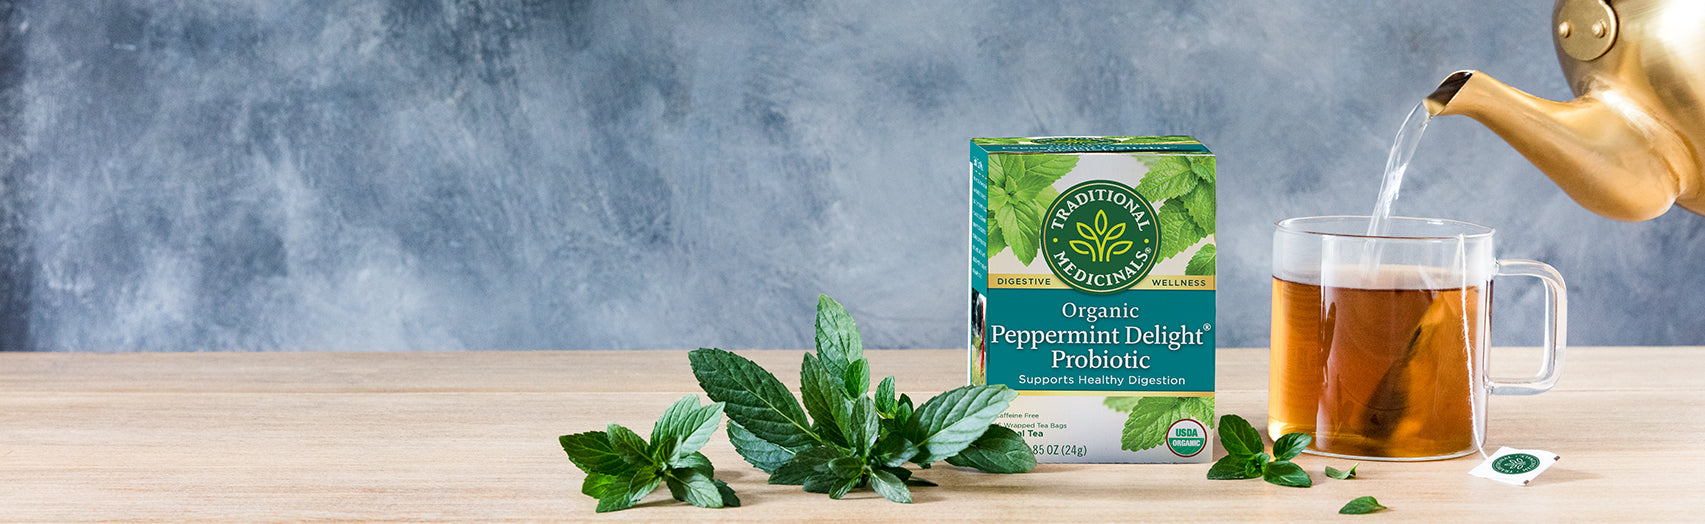 Benefits of Peppermint Delight Probiotic Tea